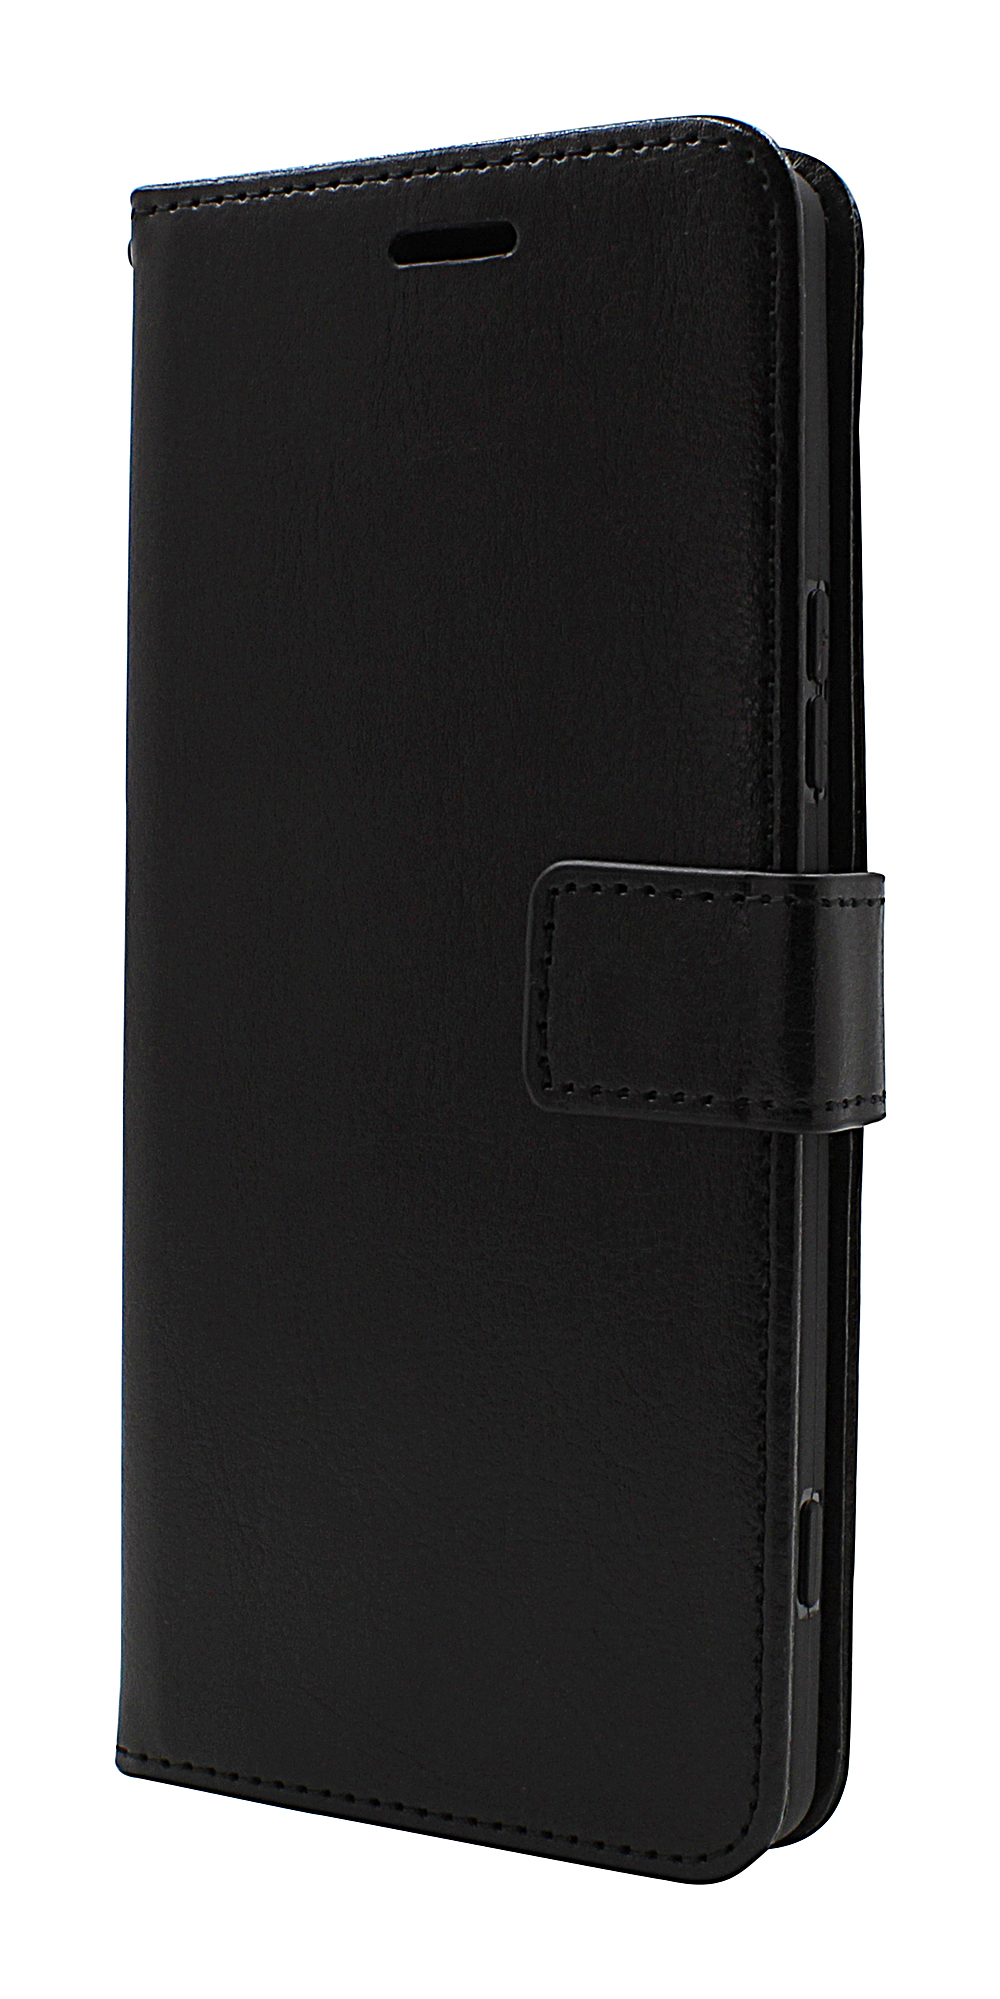 Crazy Horse Wallet Sony Xperia 1 II (XQ-AT51)